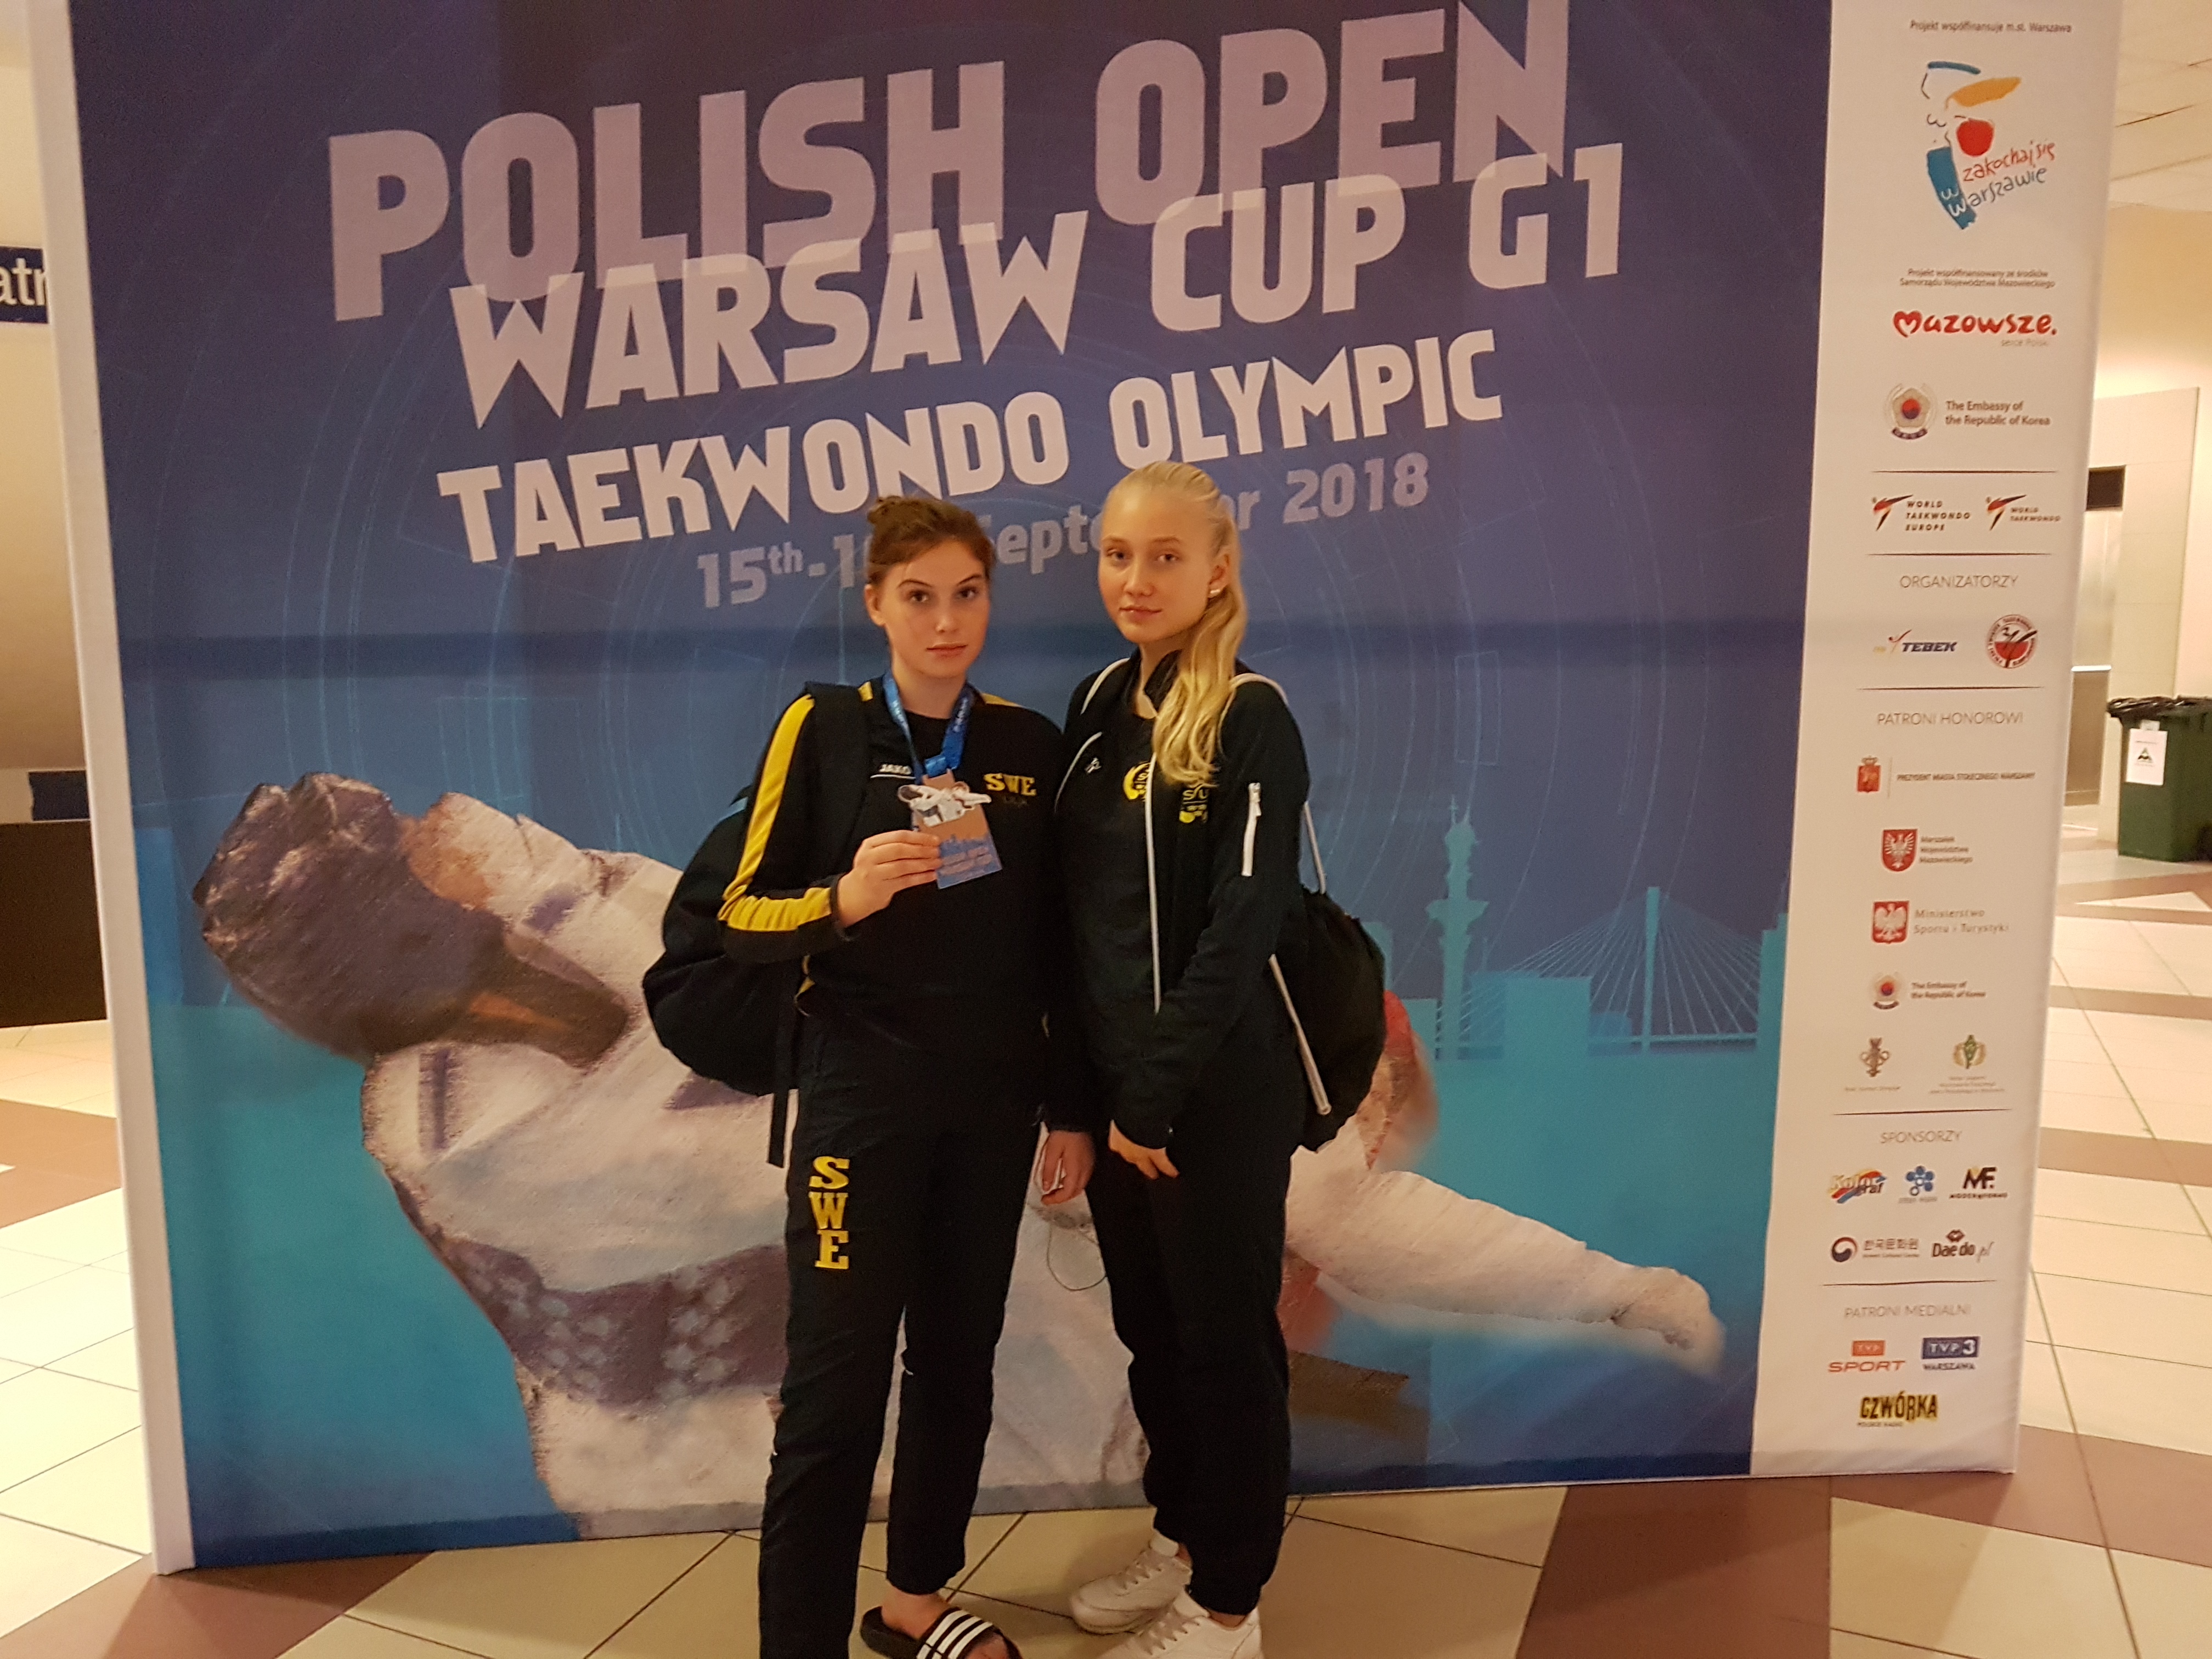 Resultat Polish Open G1